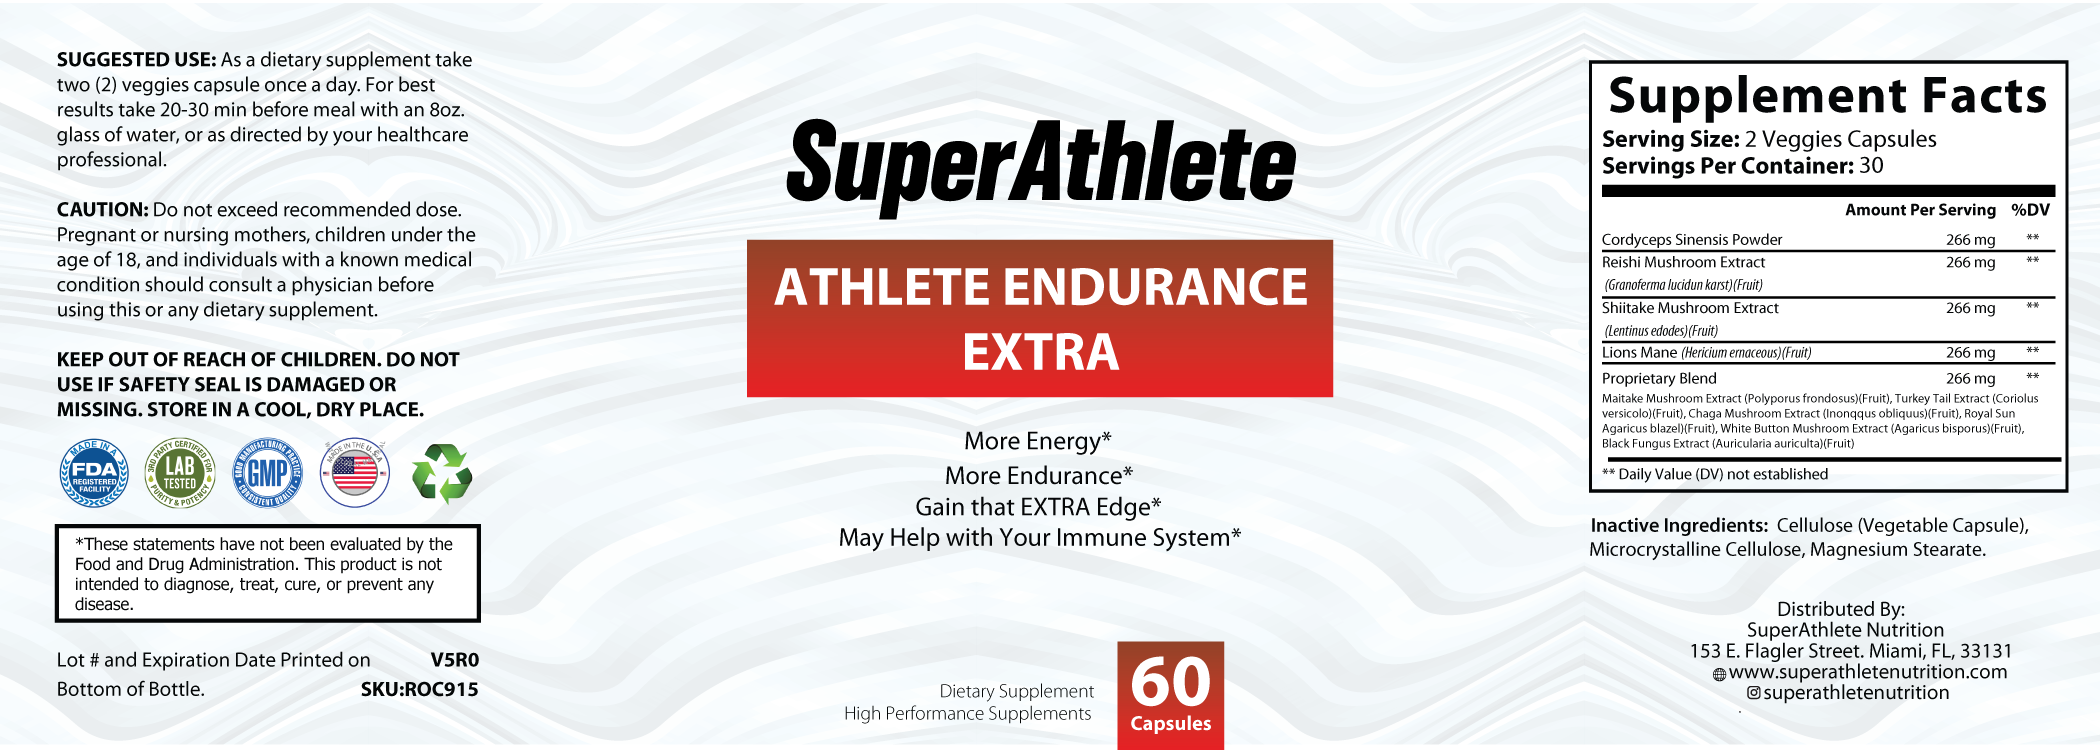 SuperAthlete Endurance Extra